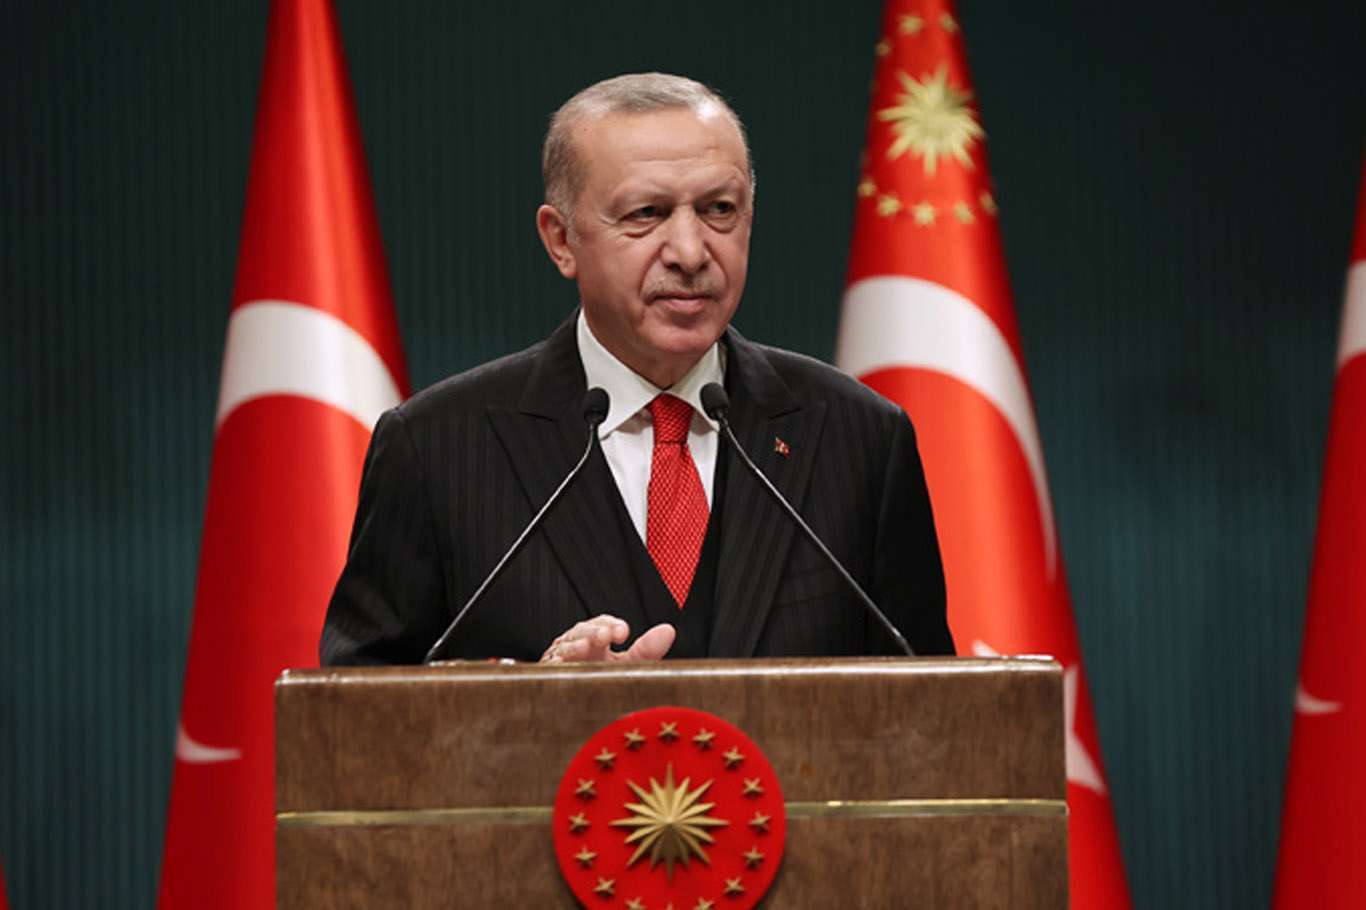 Türkiye wants stability and security in its region--Erdoğan